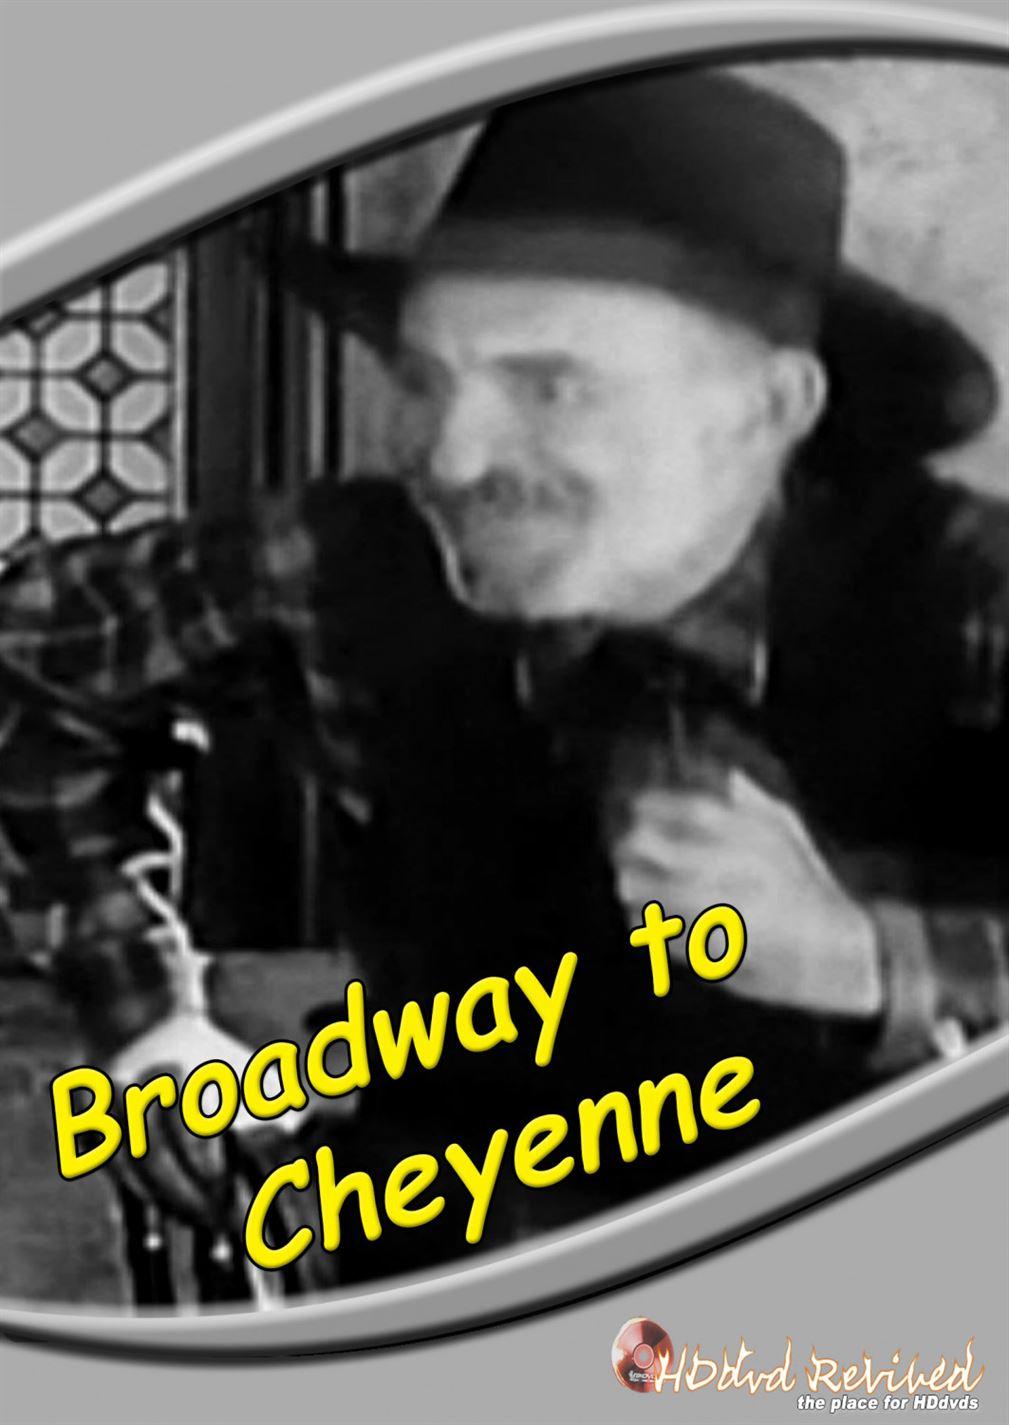 Broadway to Cheyenne (1932) Standard DVD (HDDVD-Revived) UK Seller 